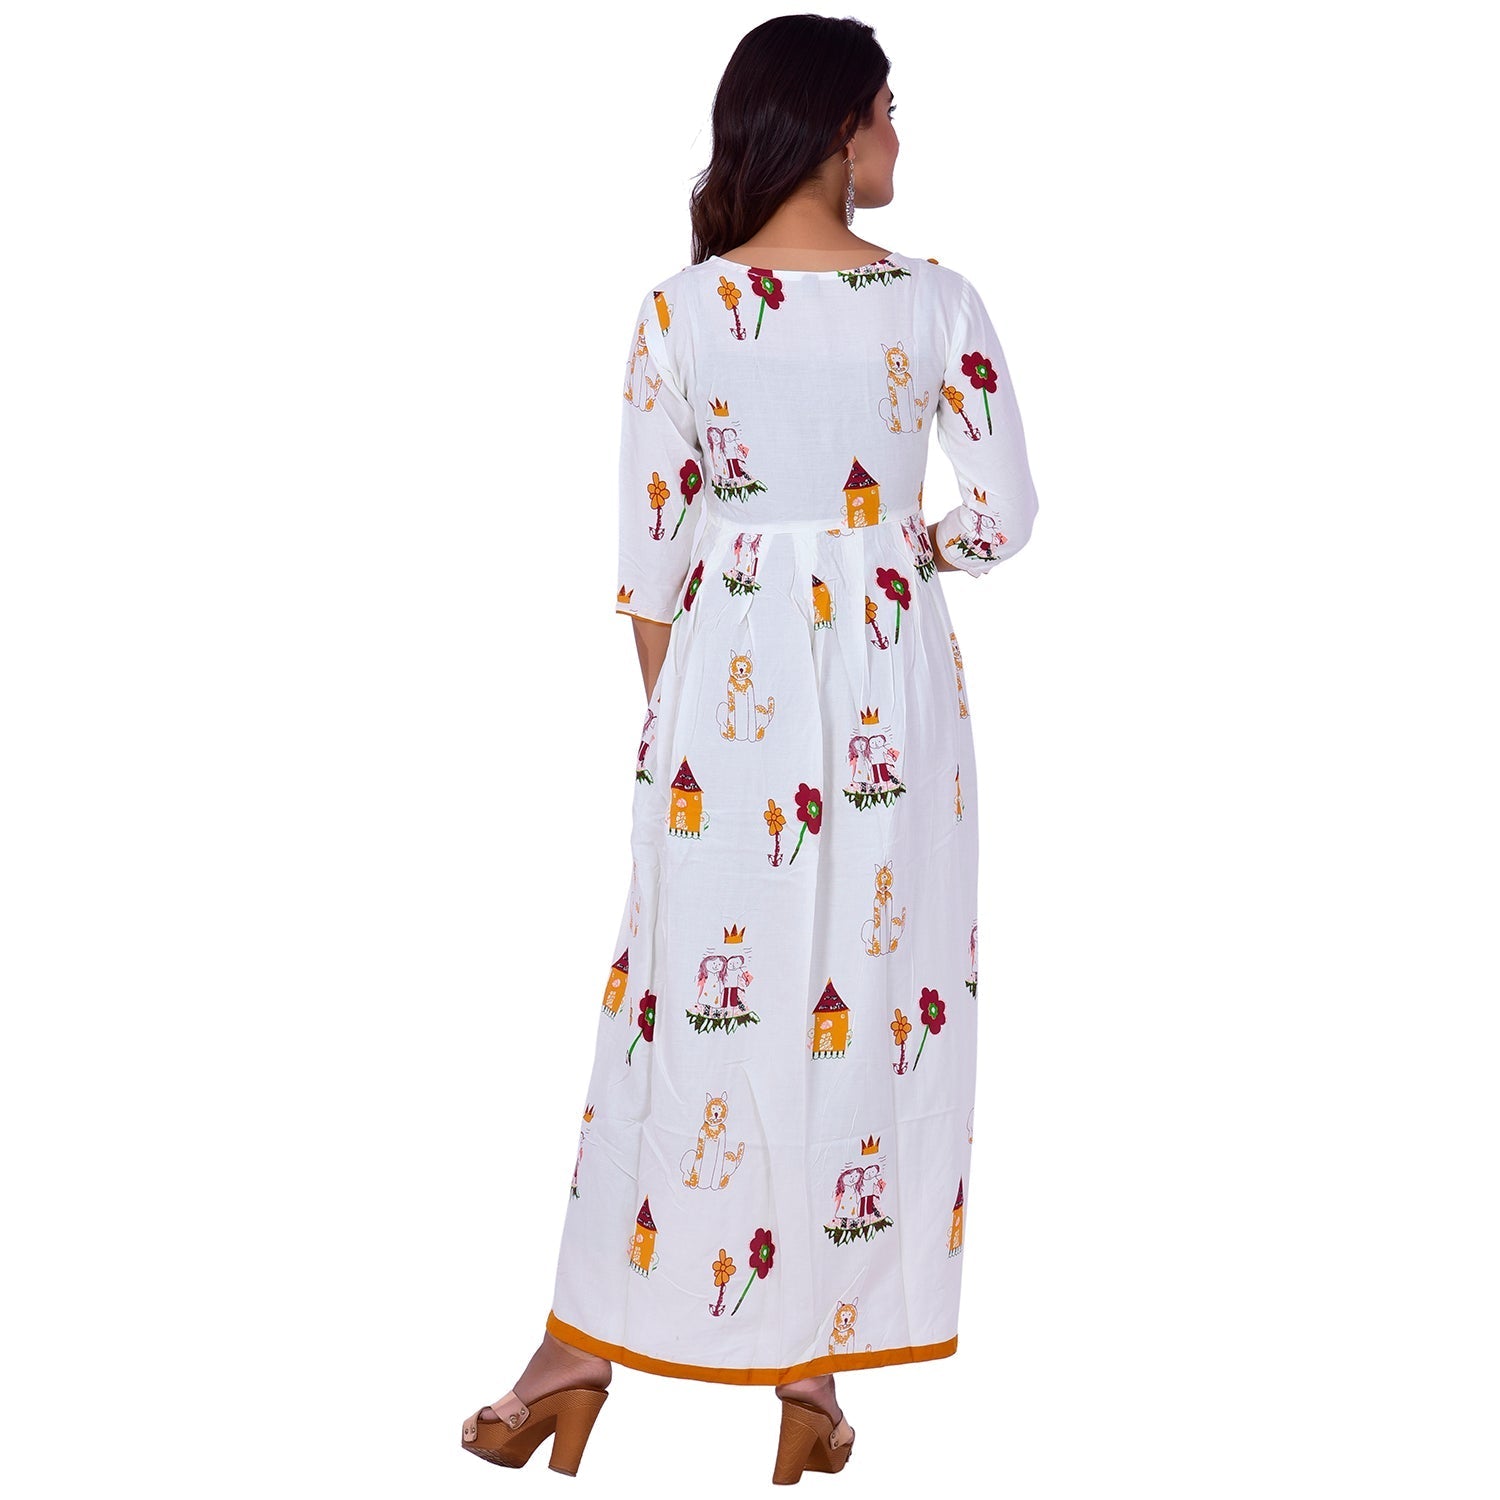 Women Anarkali Style Gown Kurti